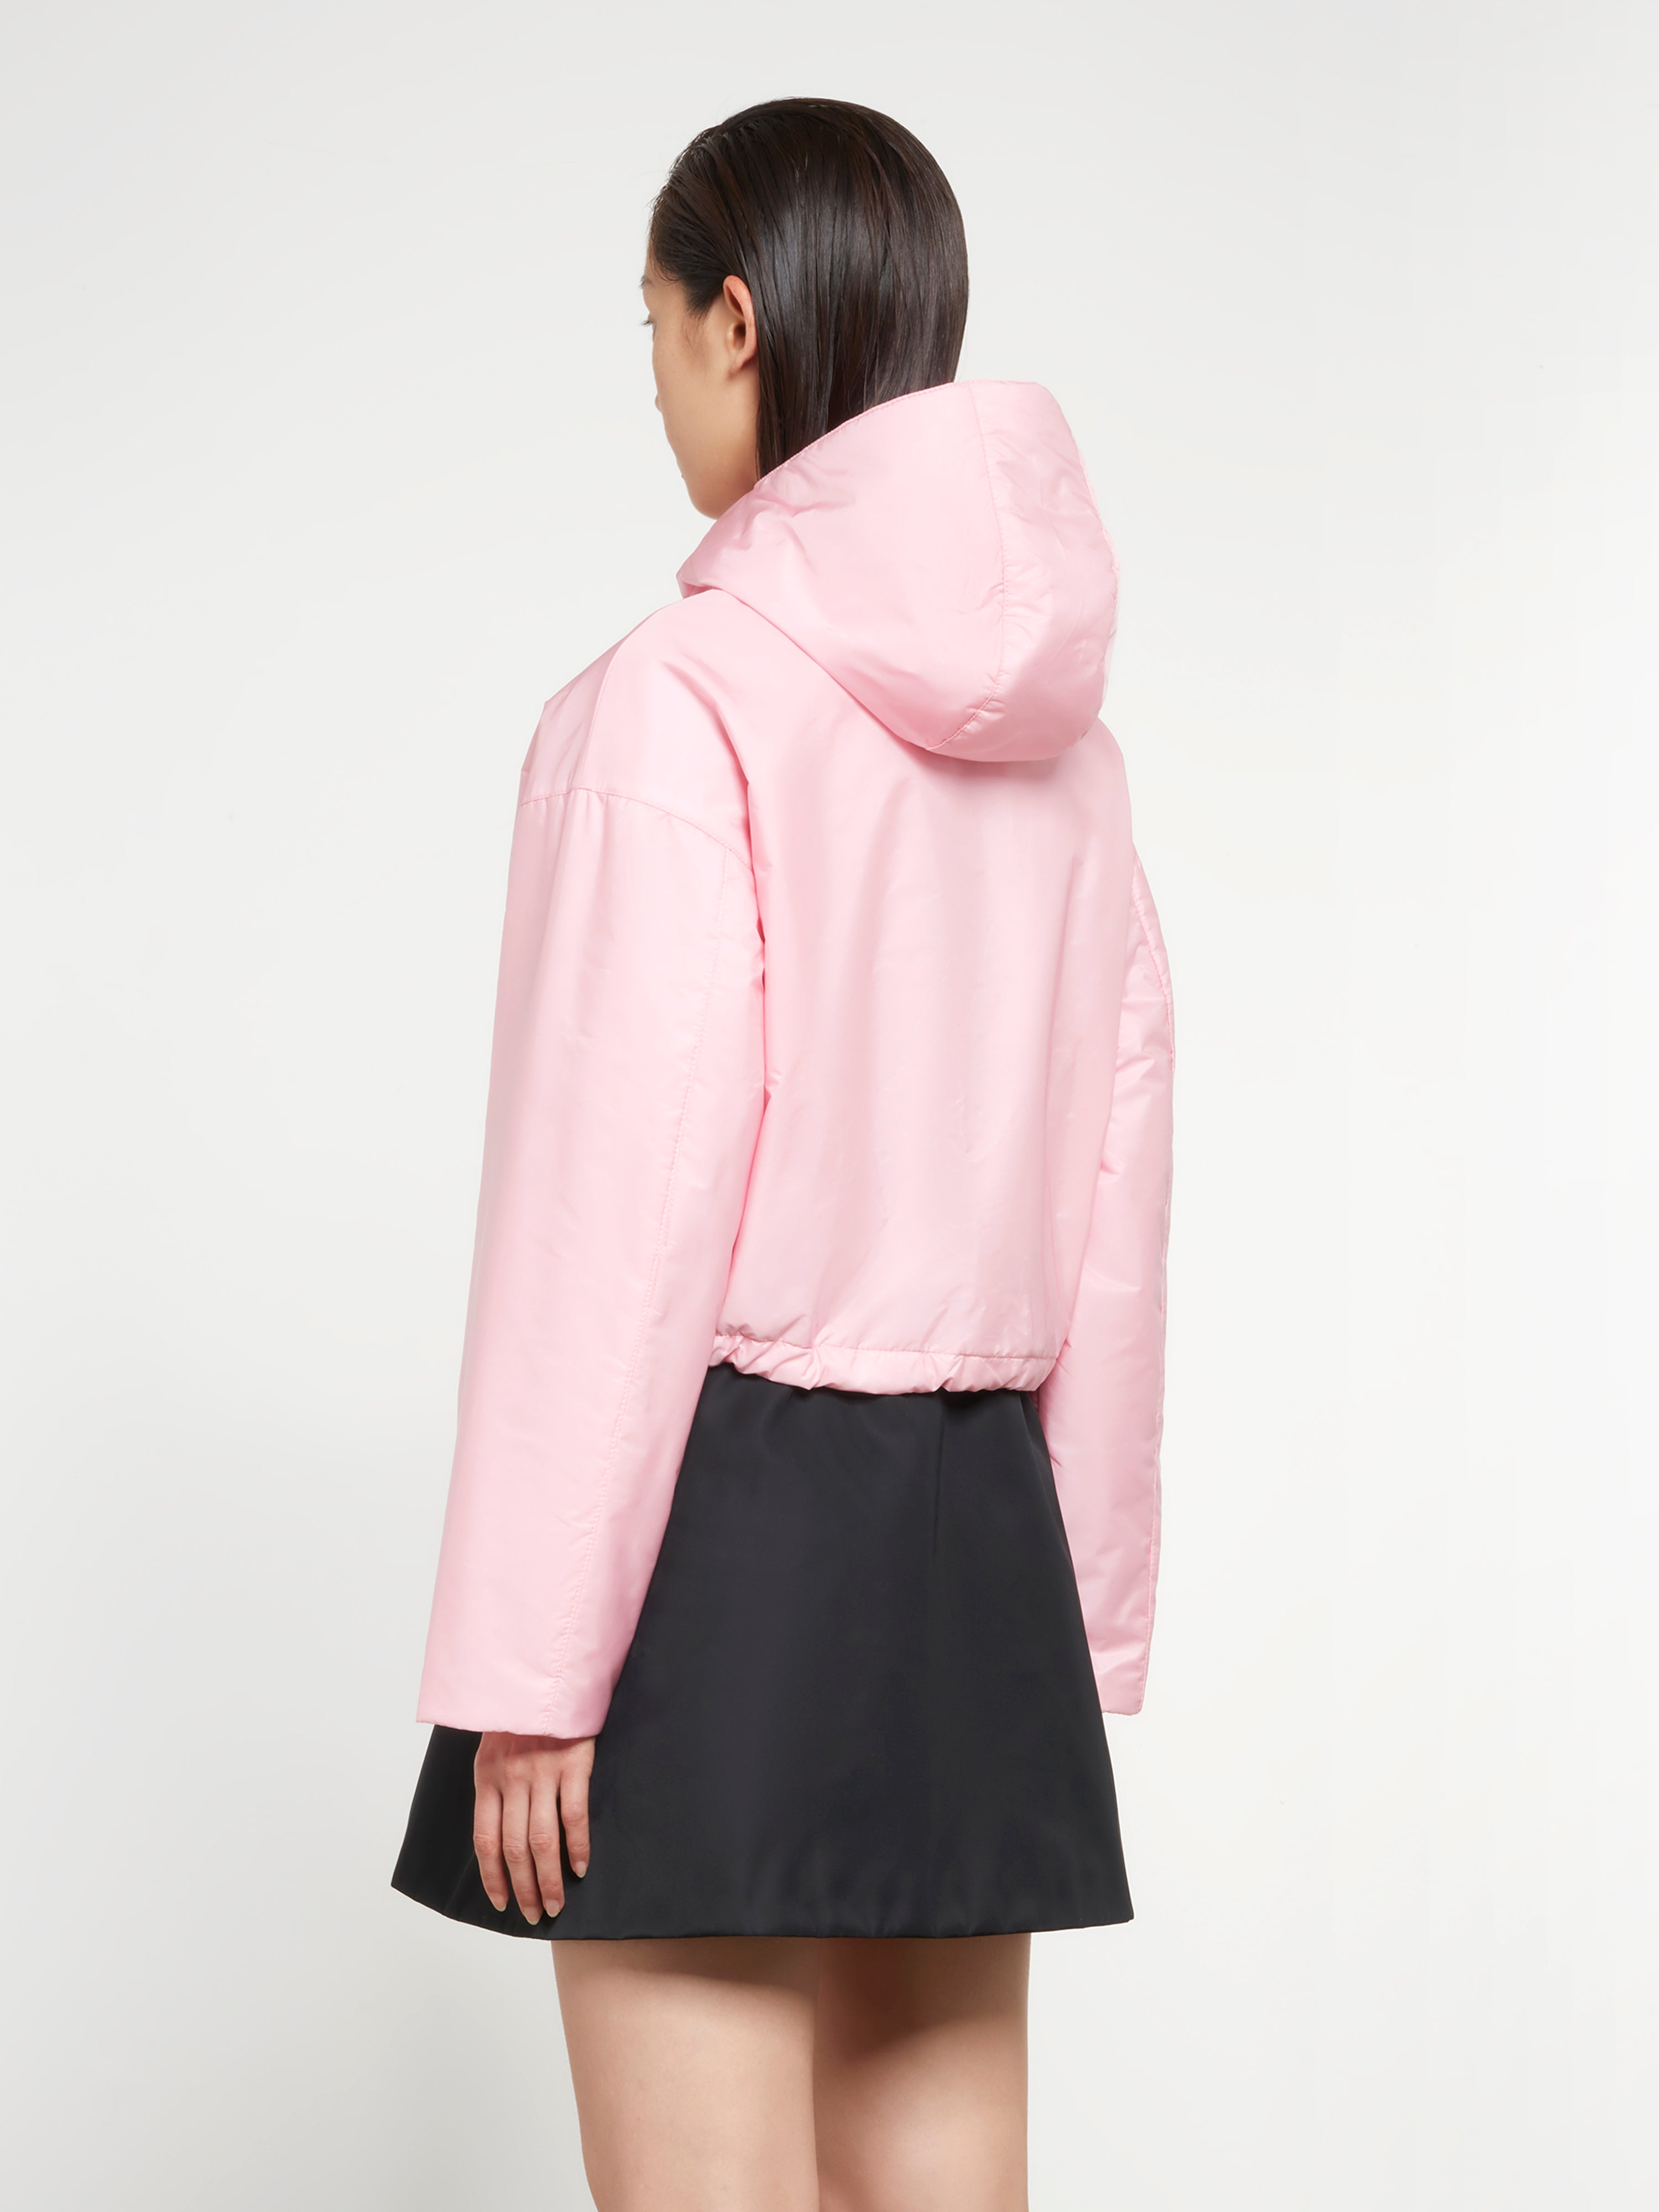 Prada - Women’s Hooded Blouson - (Pink)